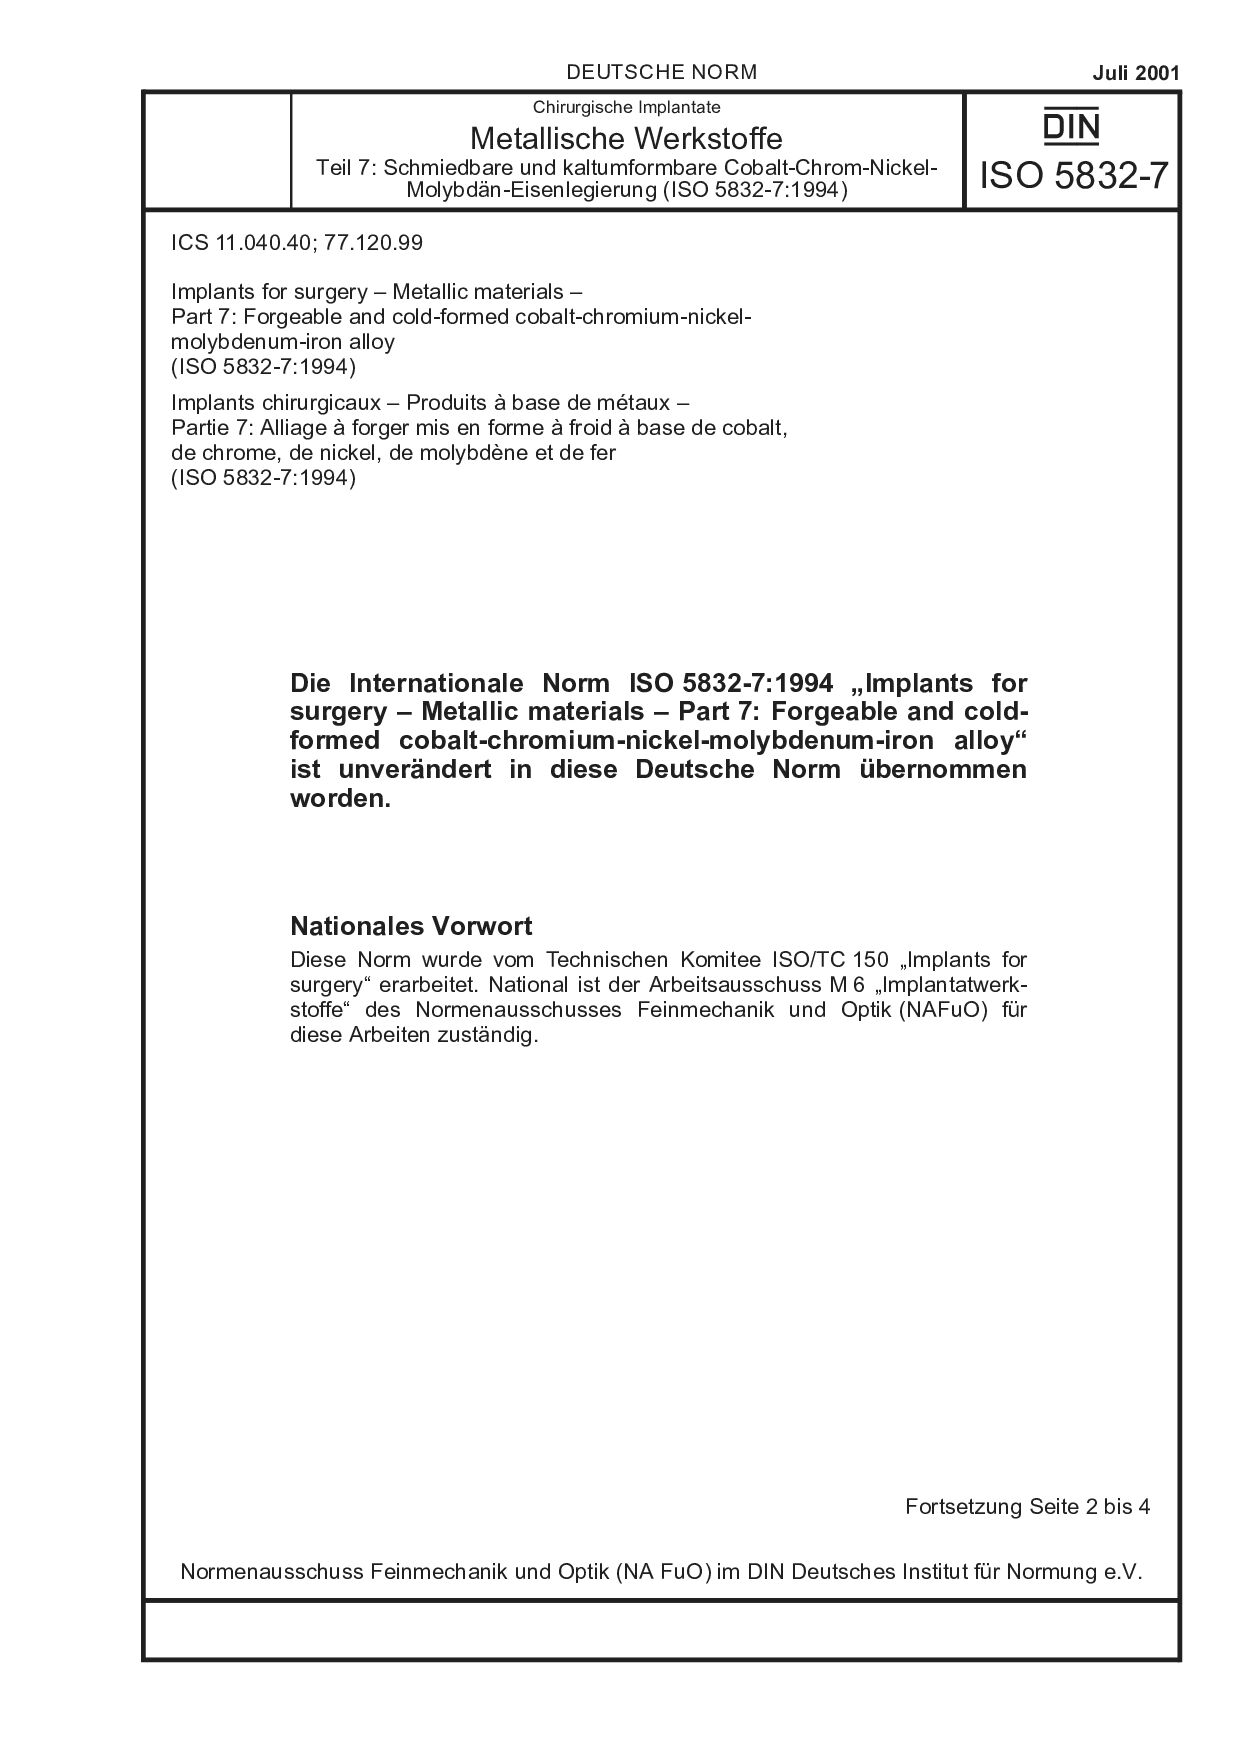 DIN ISO 5832-7:2001